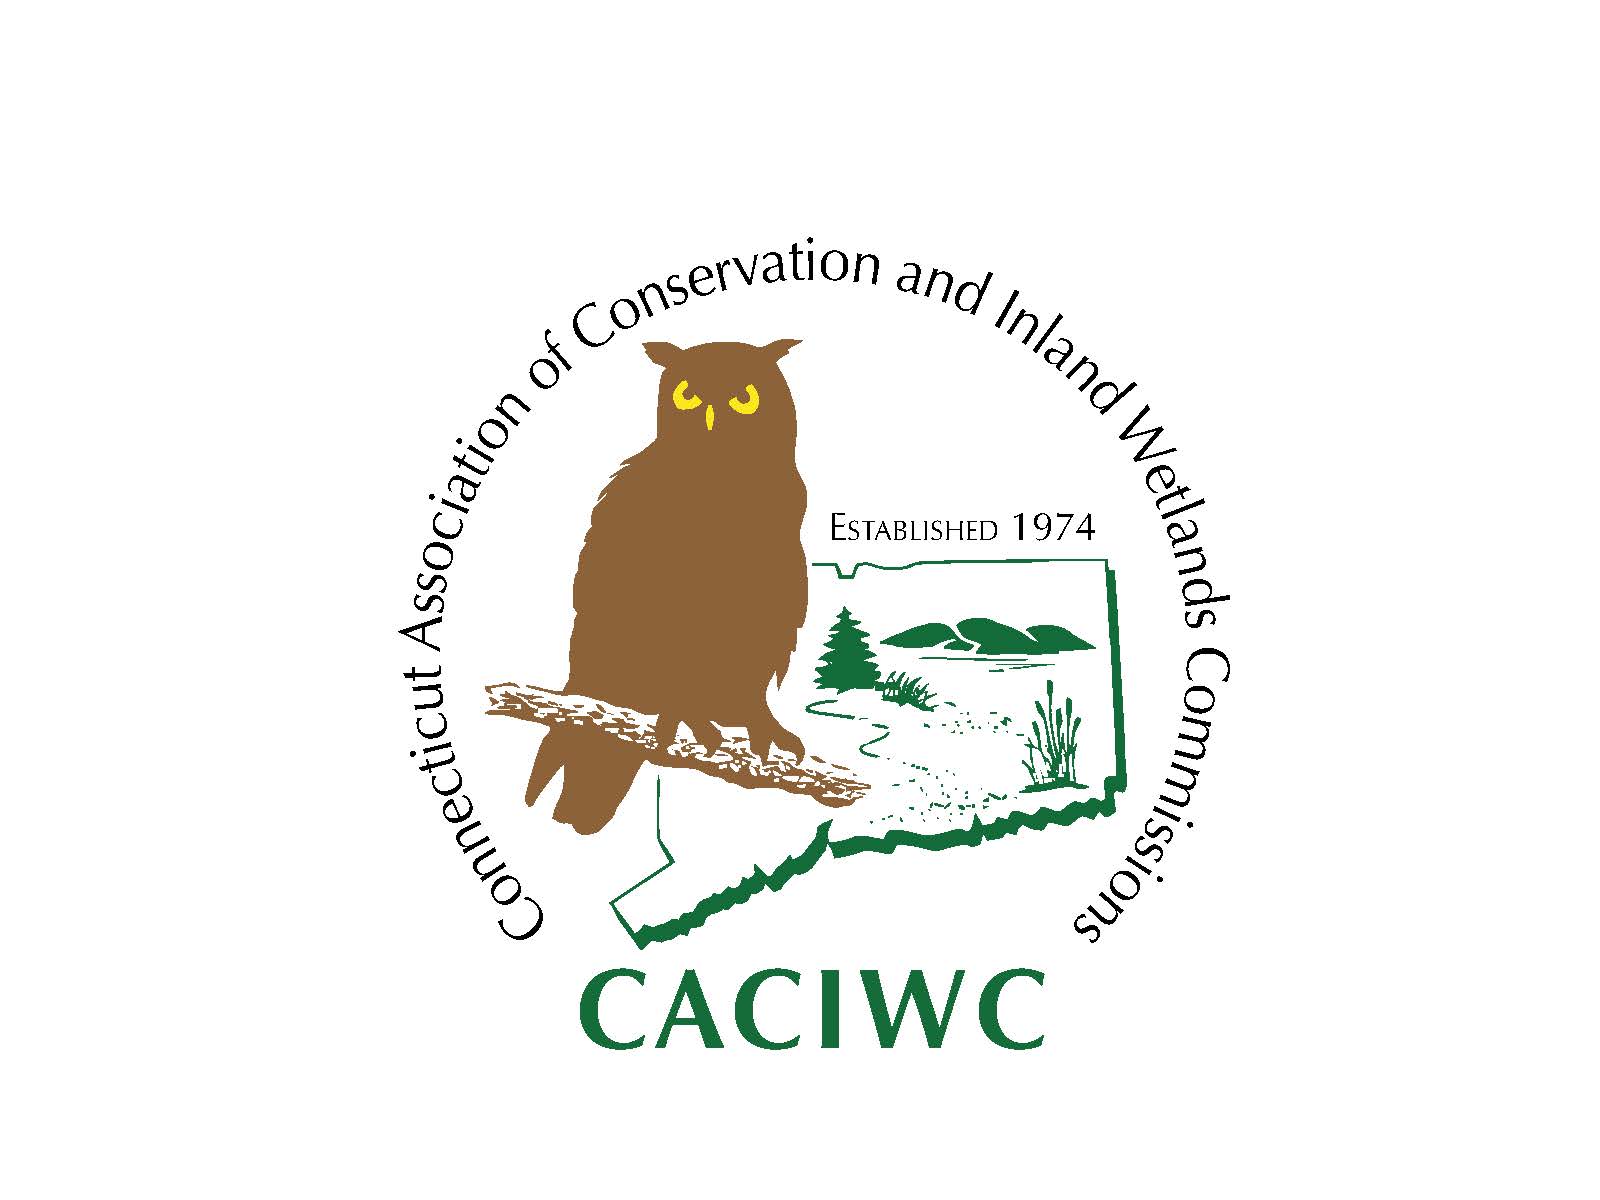 CACIWC logo with owl